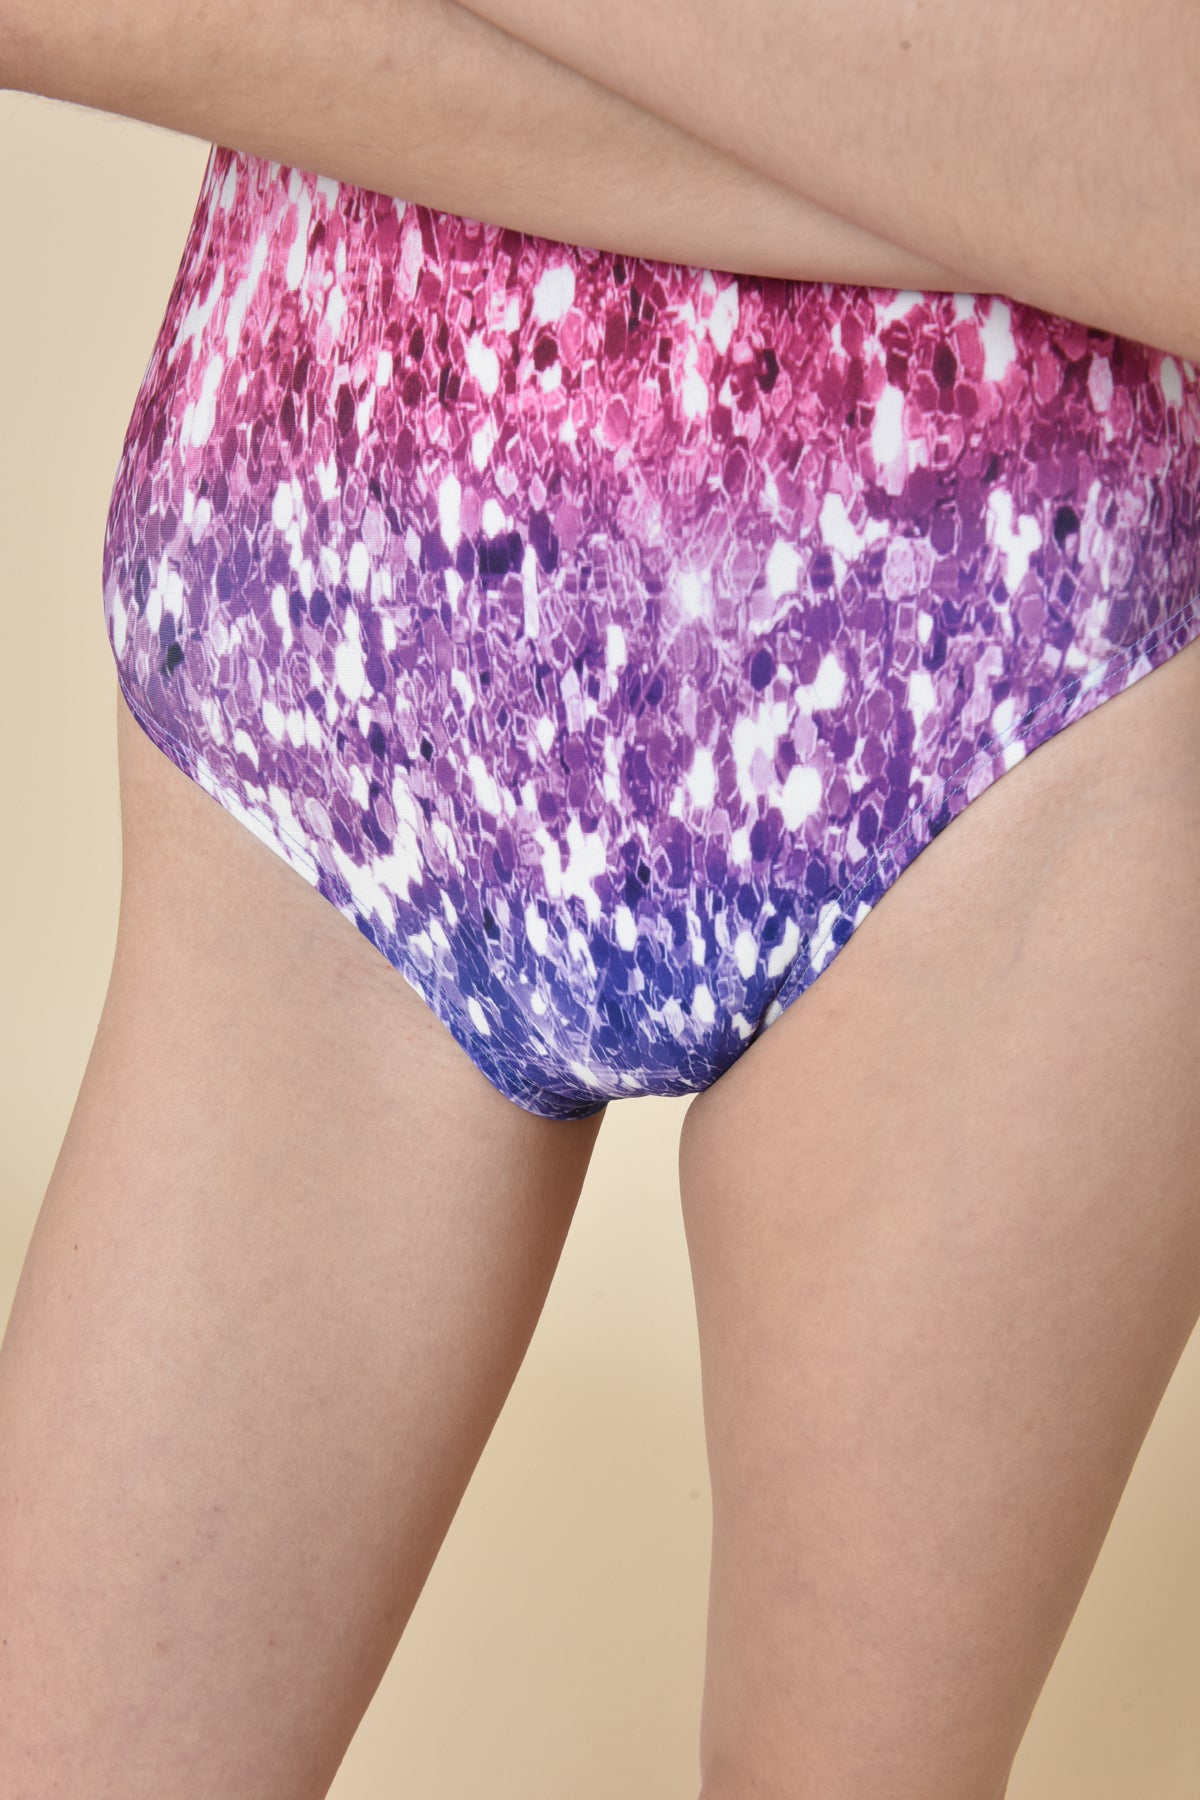 Starry glitter Swimsuit - Multi